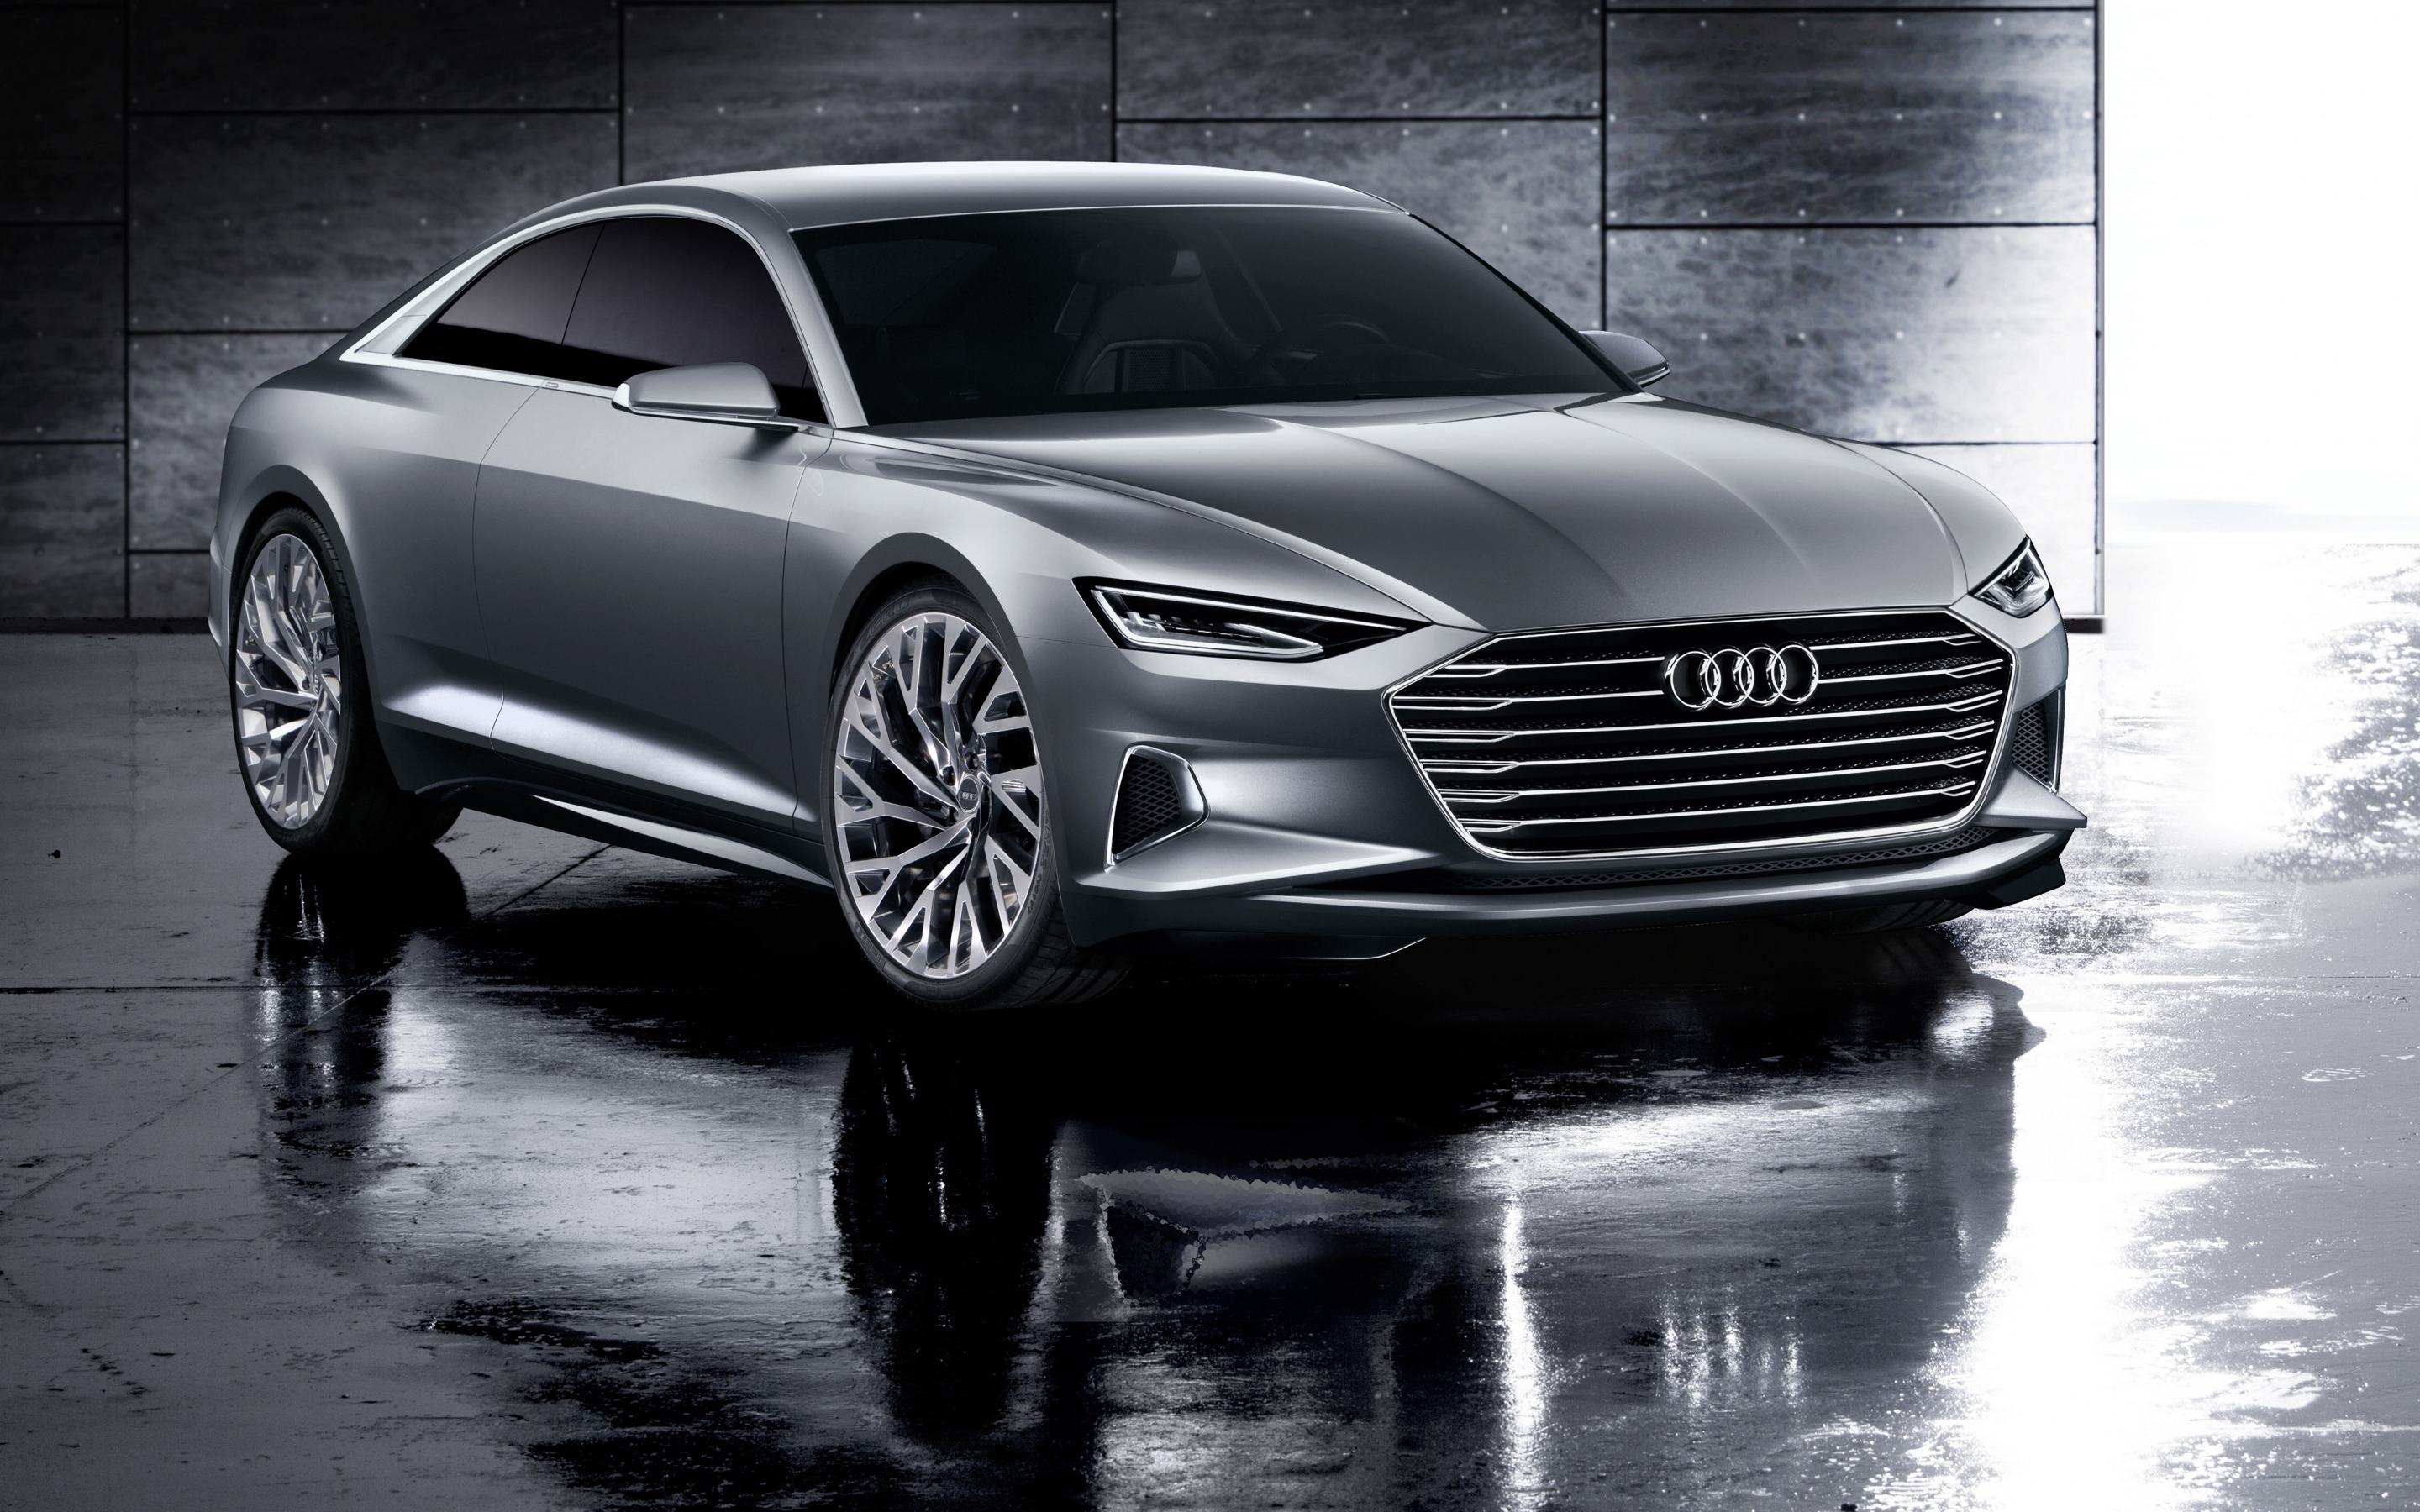 2014 Audi Prologue Concept  for 2880 x 1800 Retina Display resolution